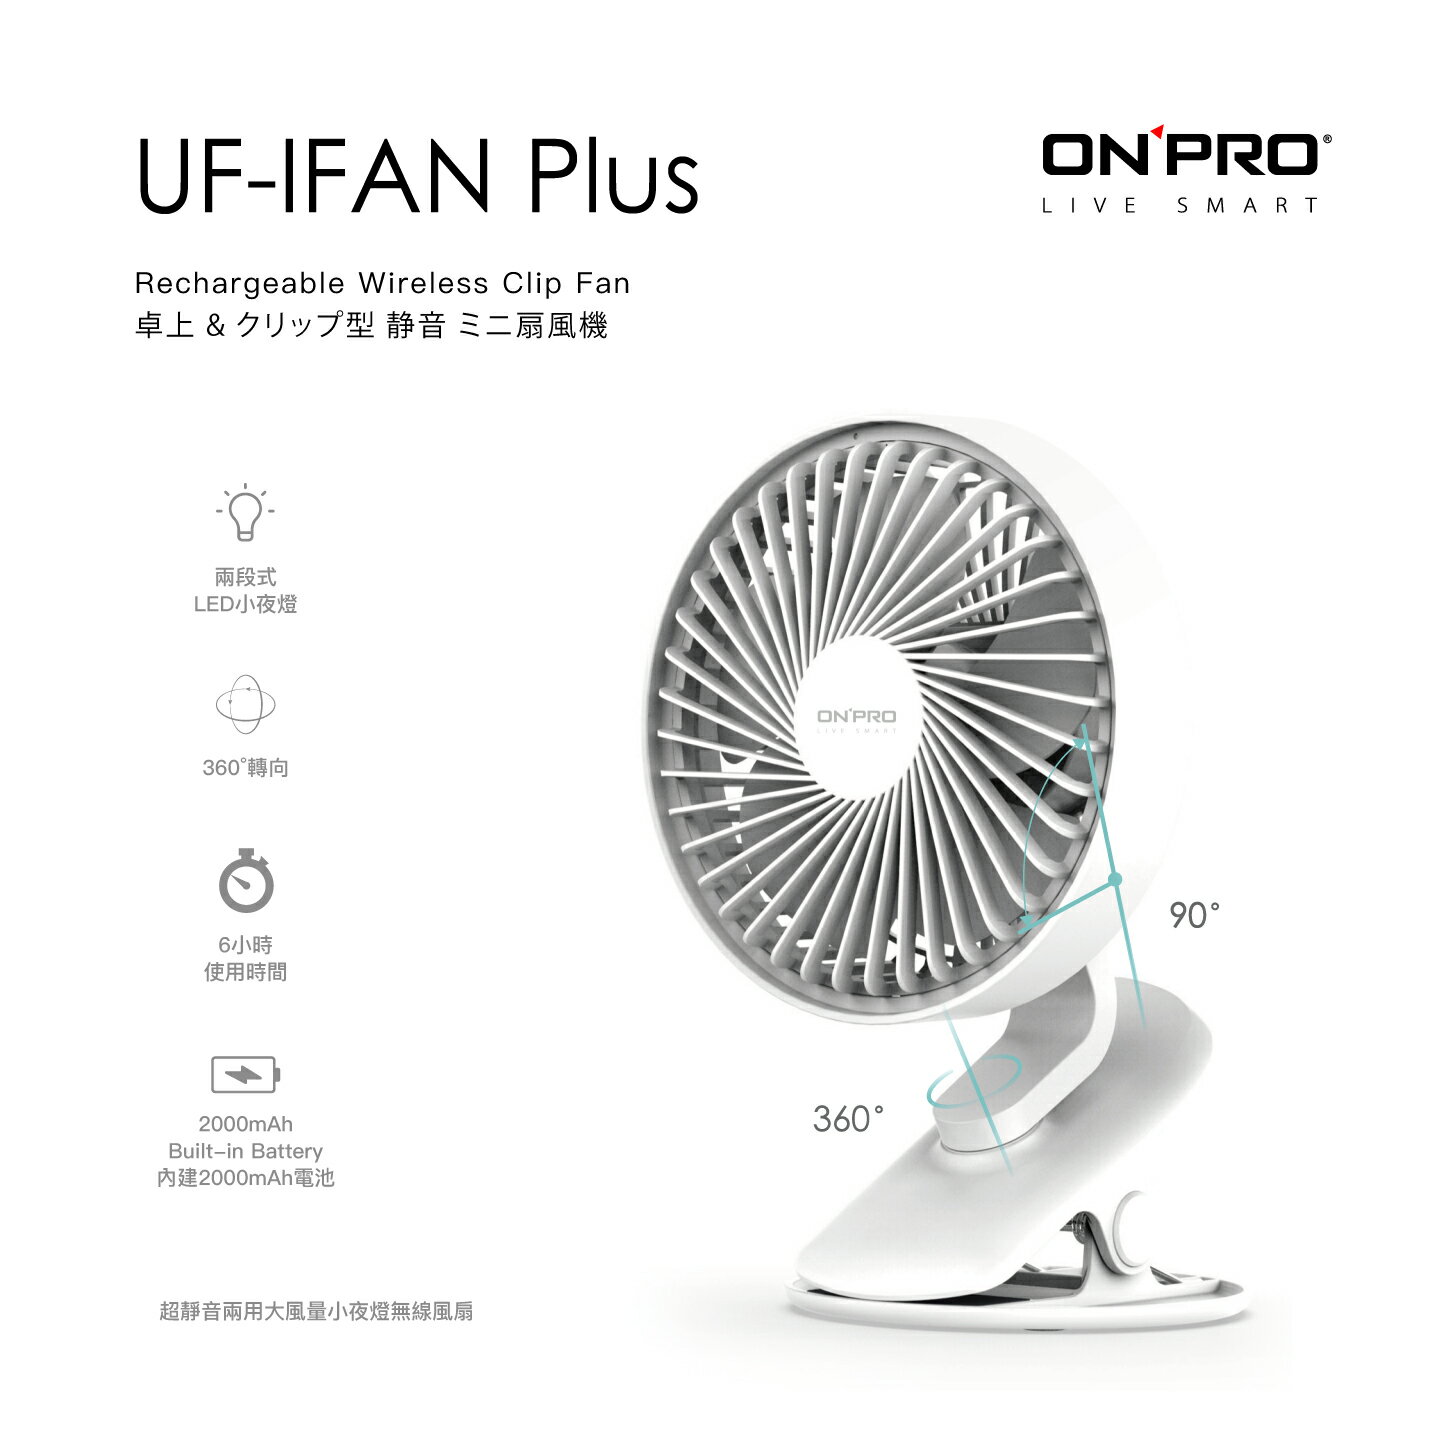 ONPRO UF-IFAN Plus 無線小夜燈涼風扇 /4715219533466★愛兒麗婦幼用品★